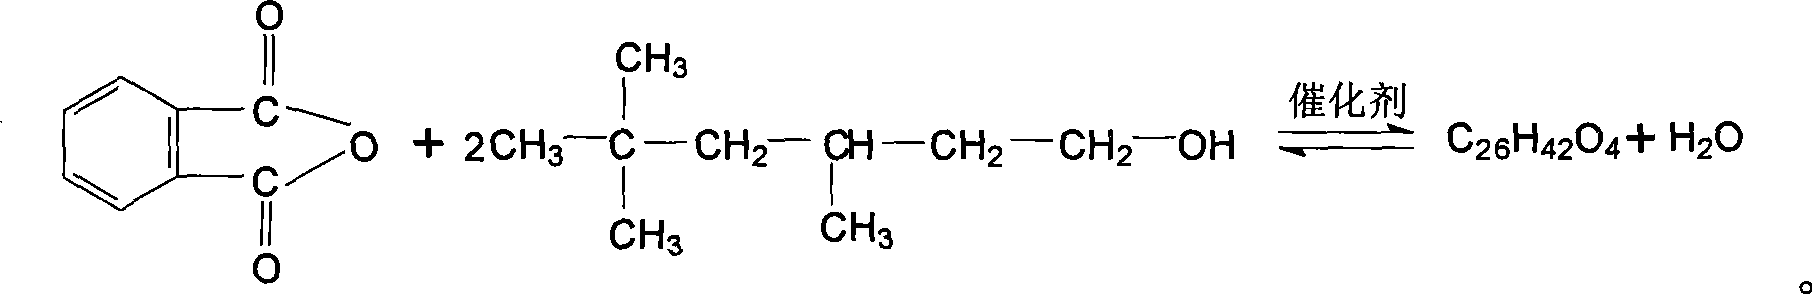 Method for producing plasticizer phthalic acid dinonyl